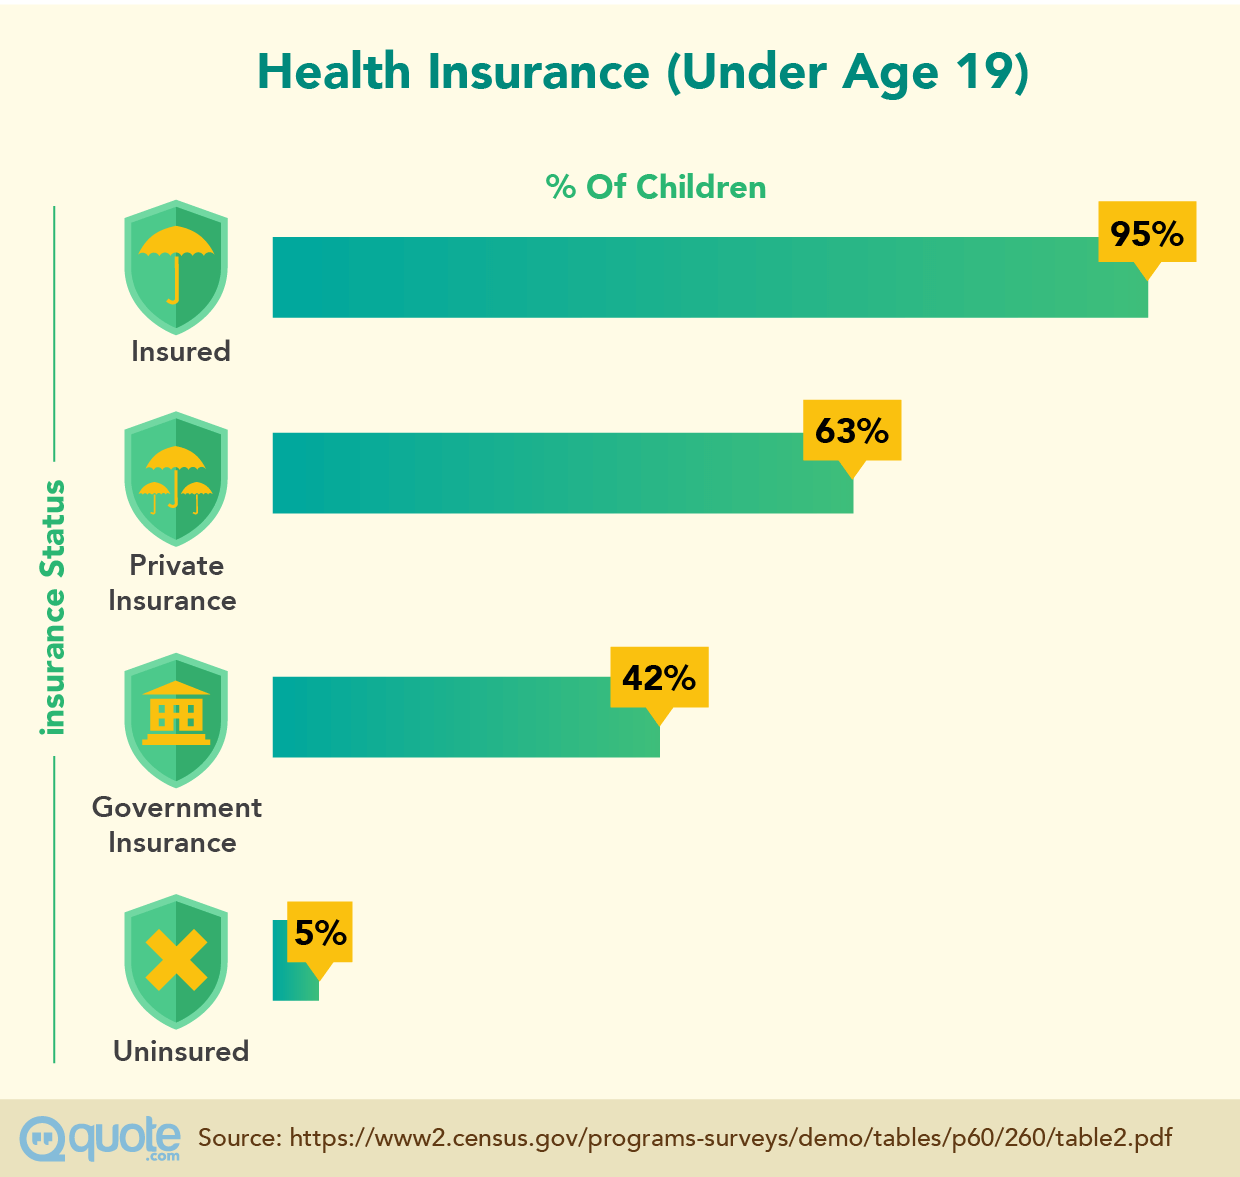 Health Insurance Status of Children